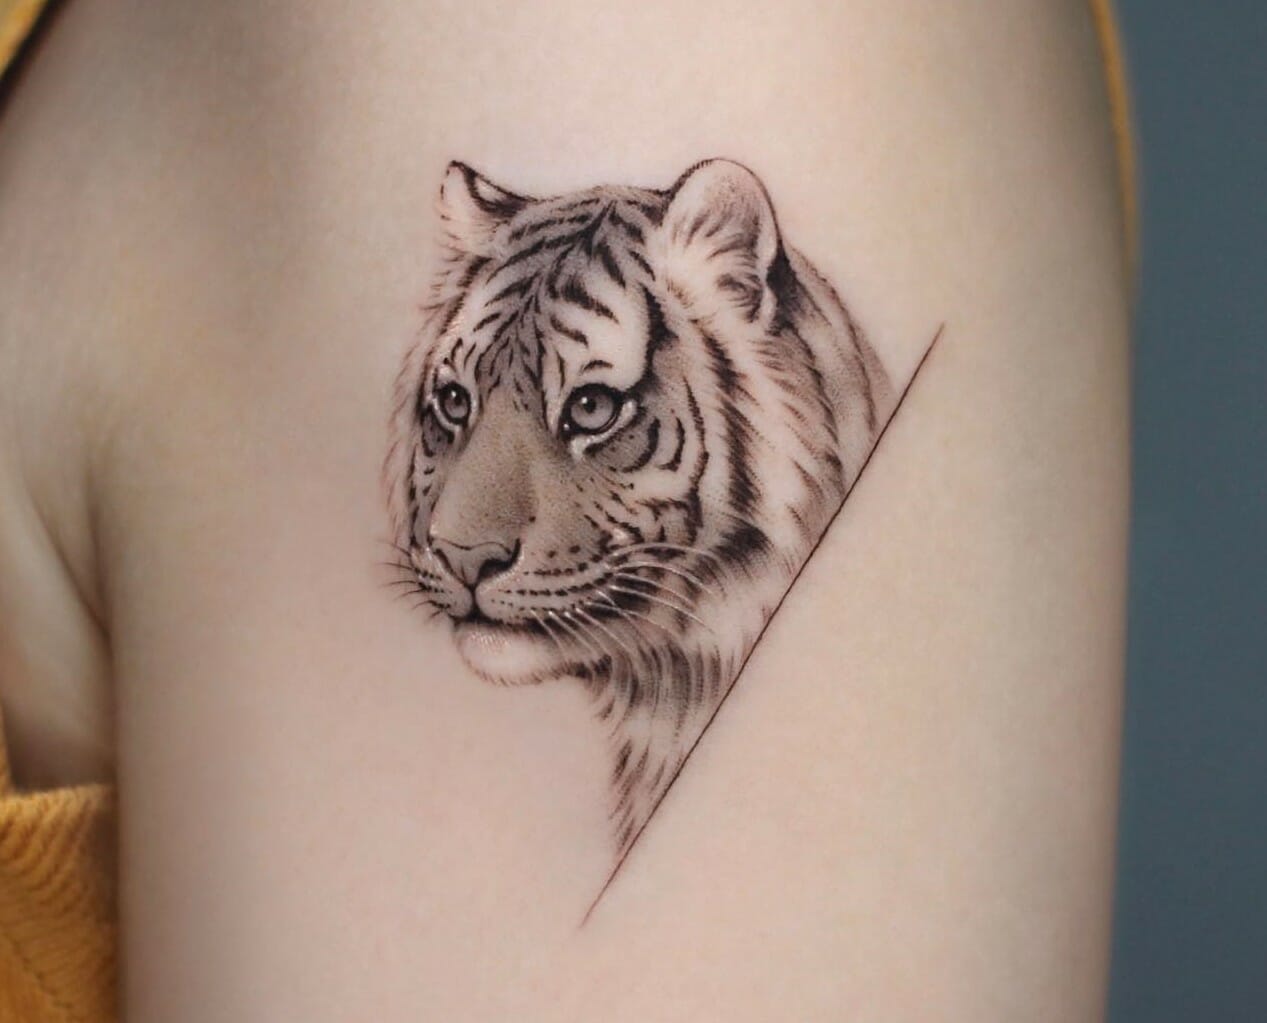 Tiger head tattoo, vintage engraving. Roaring tiger tattoo design, vintage  engraved illustration. | CanStock